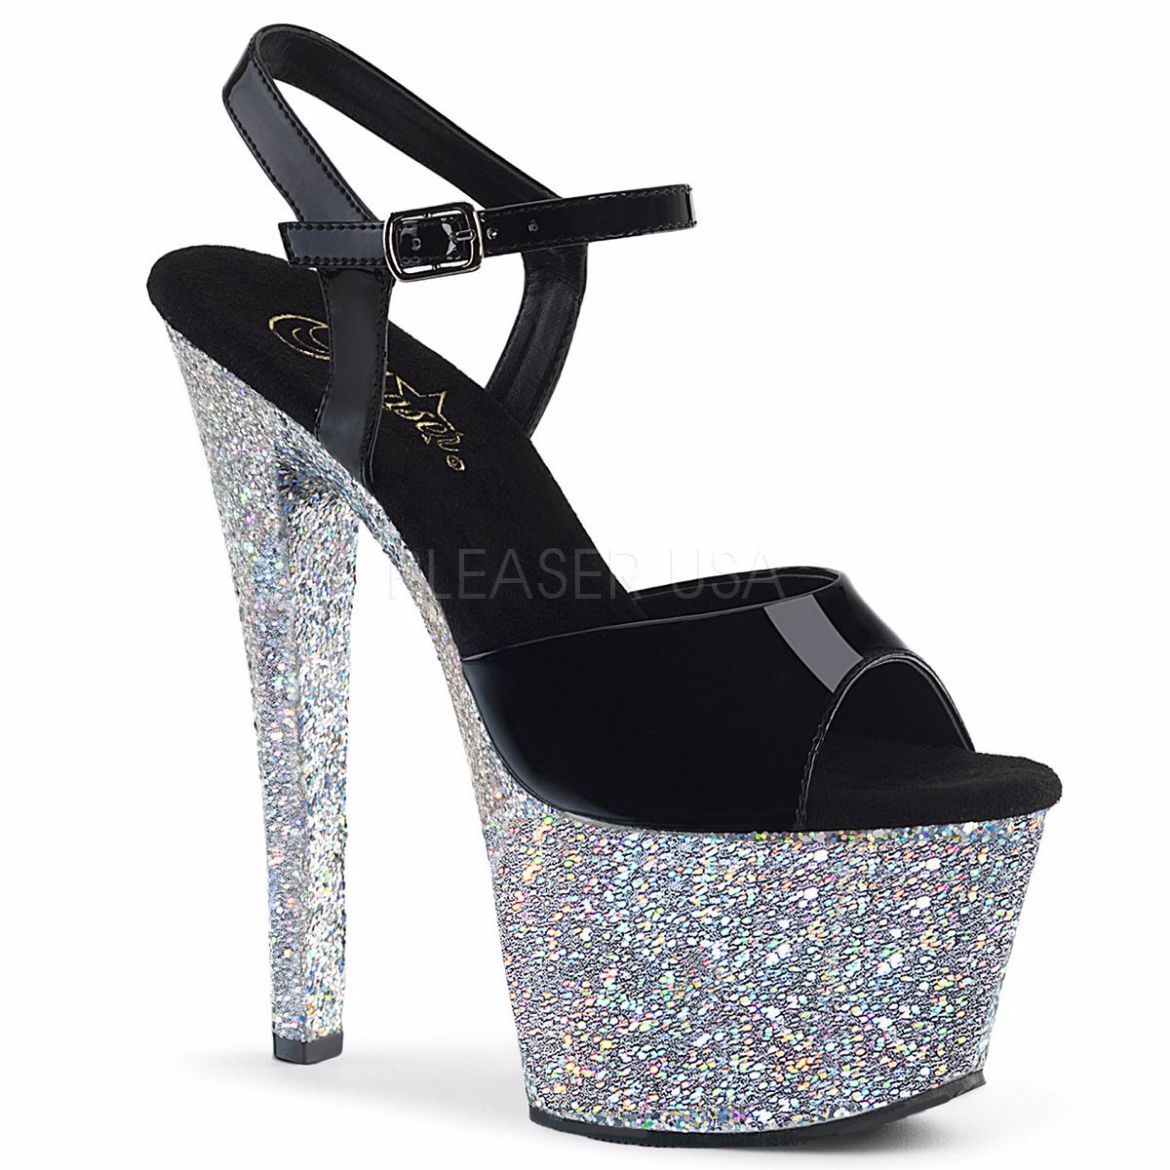 Product image of Pleaser Sky-309Lg Black Patent/Silver Multi Glitter, 7 inch (17.8 cm) Heel, 2 3/4 inch (7 cm) Platform Sandal Shoes